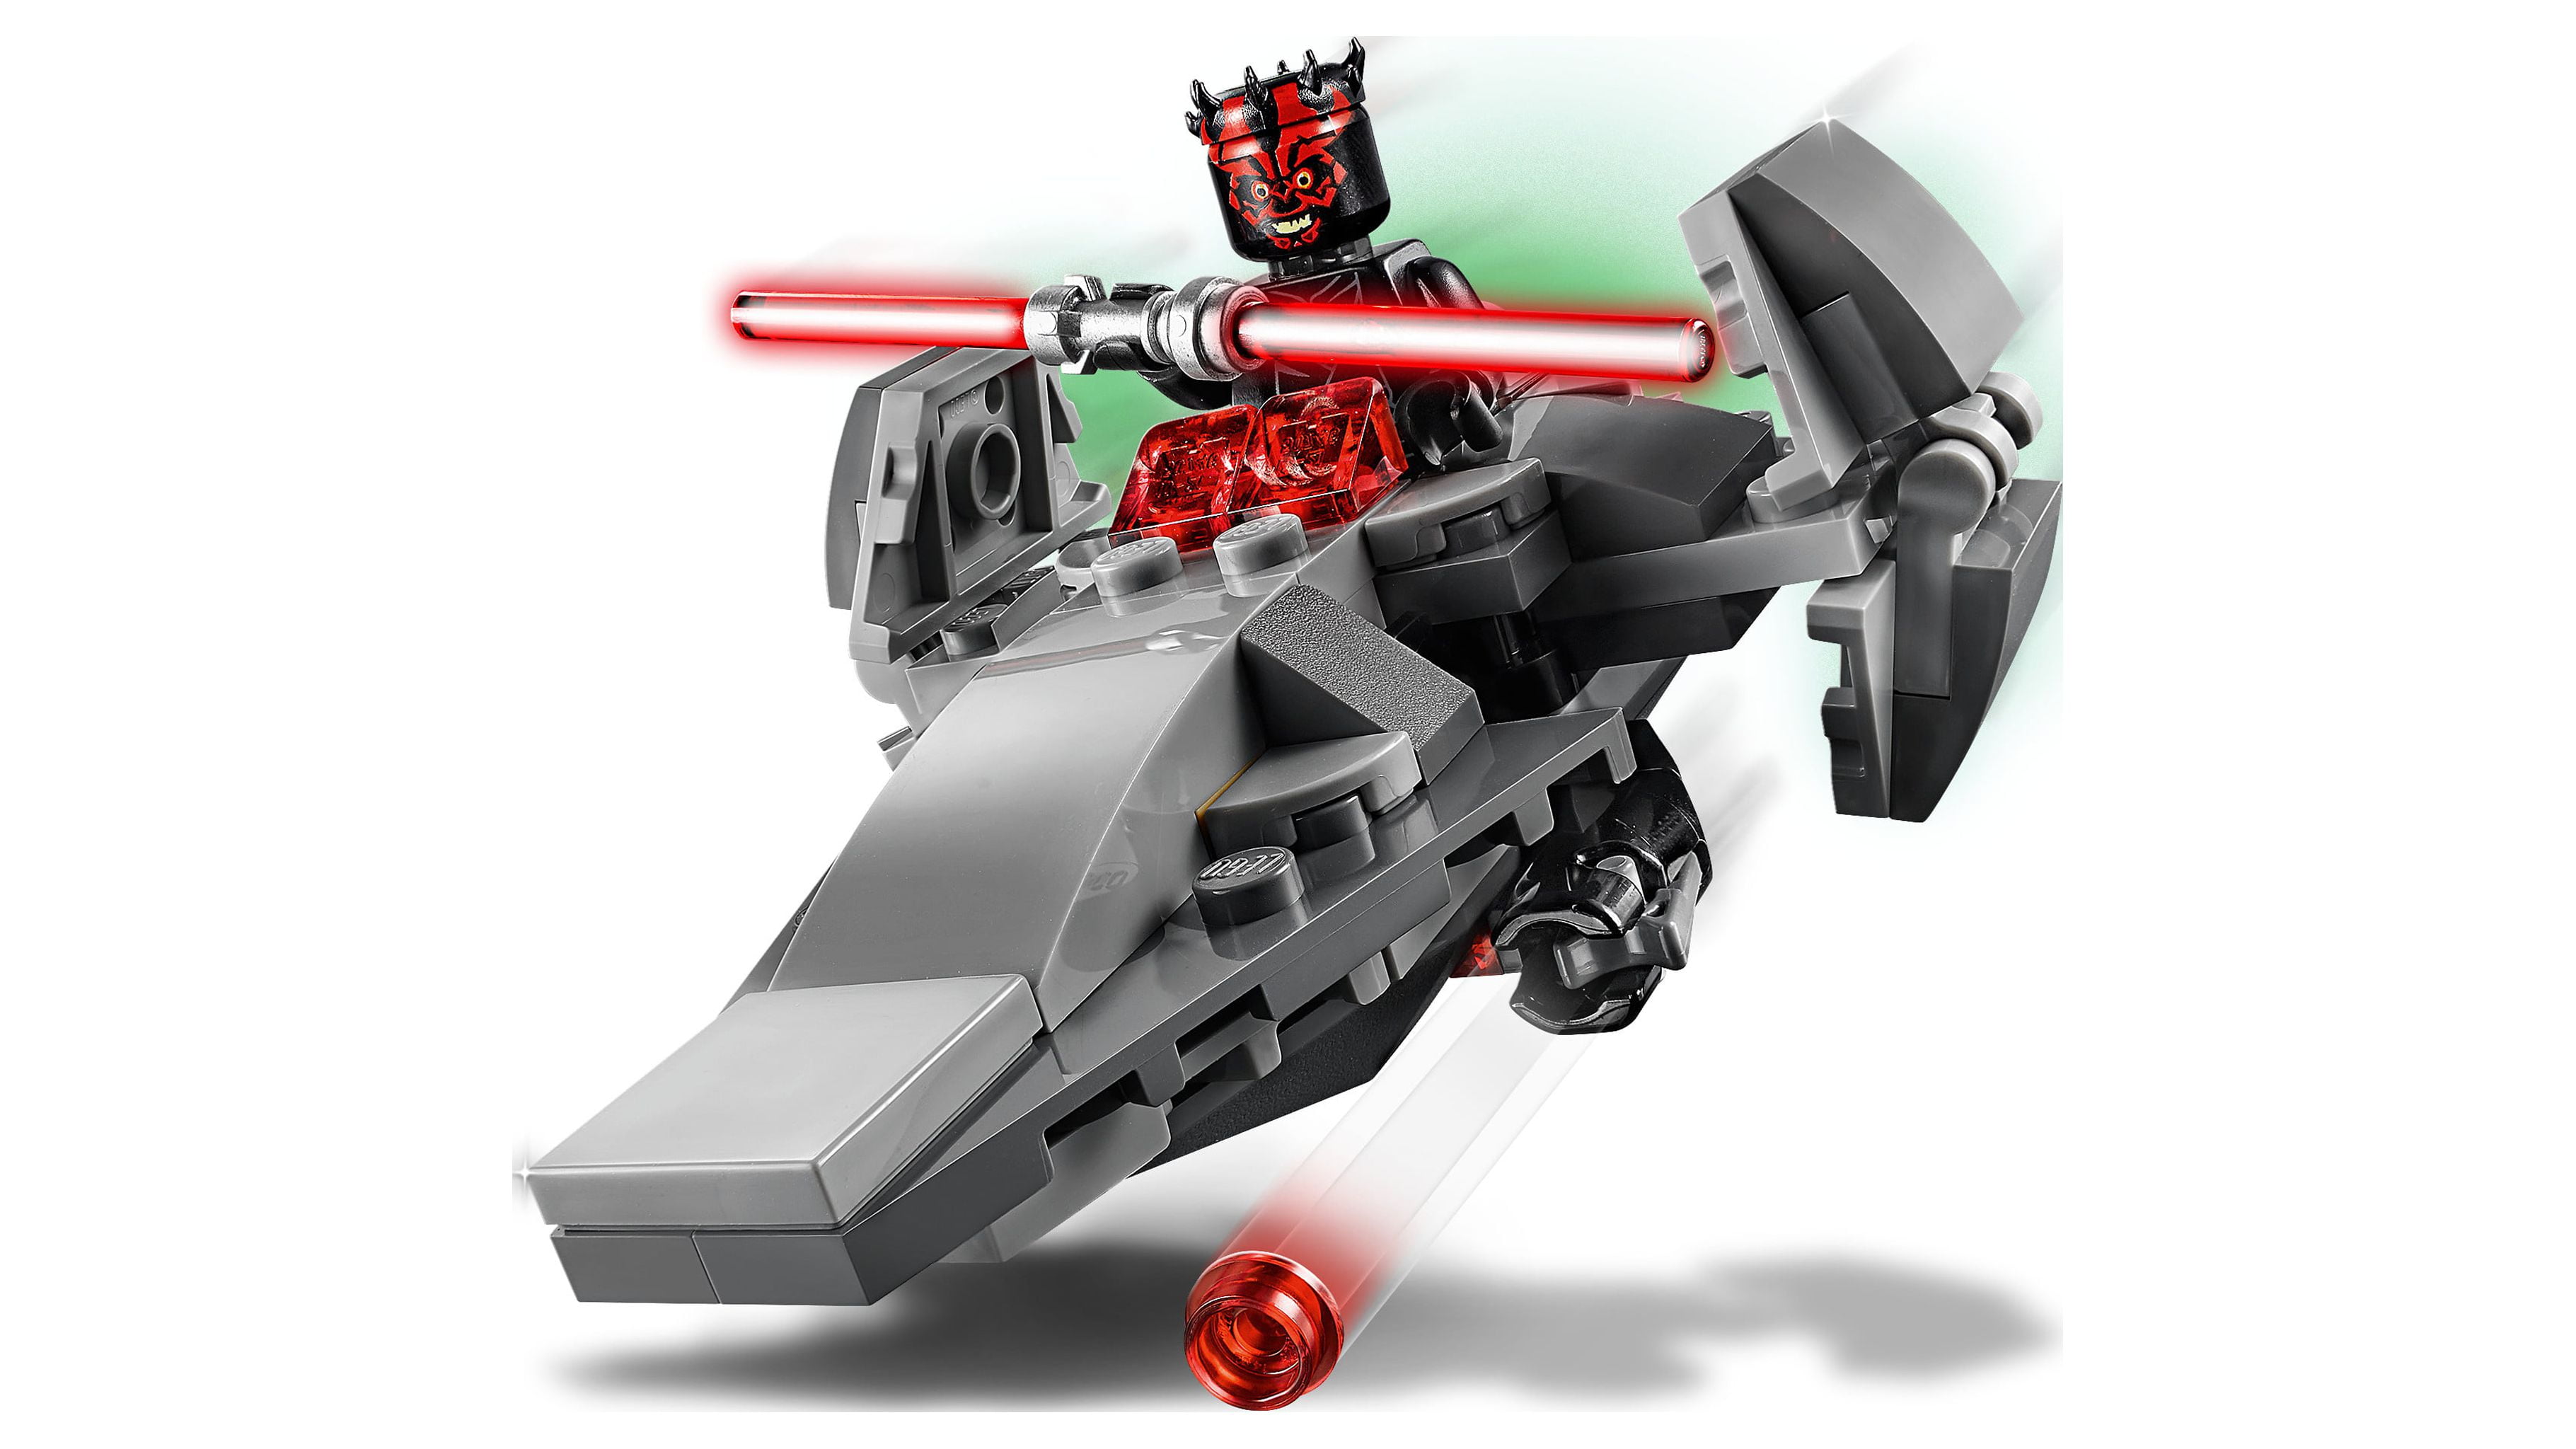 LEGO Star Wars Sith Infiltrator Microfighter 75224 Darth Maul Starship Set